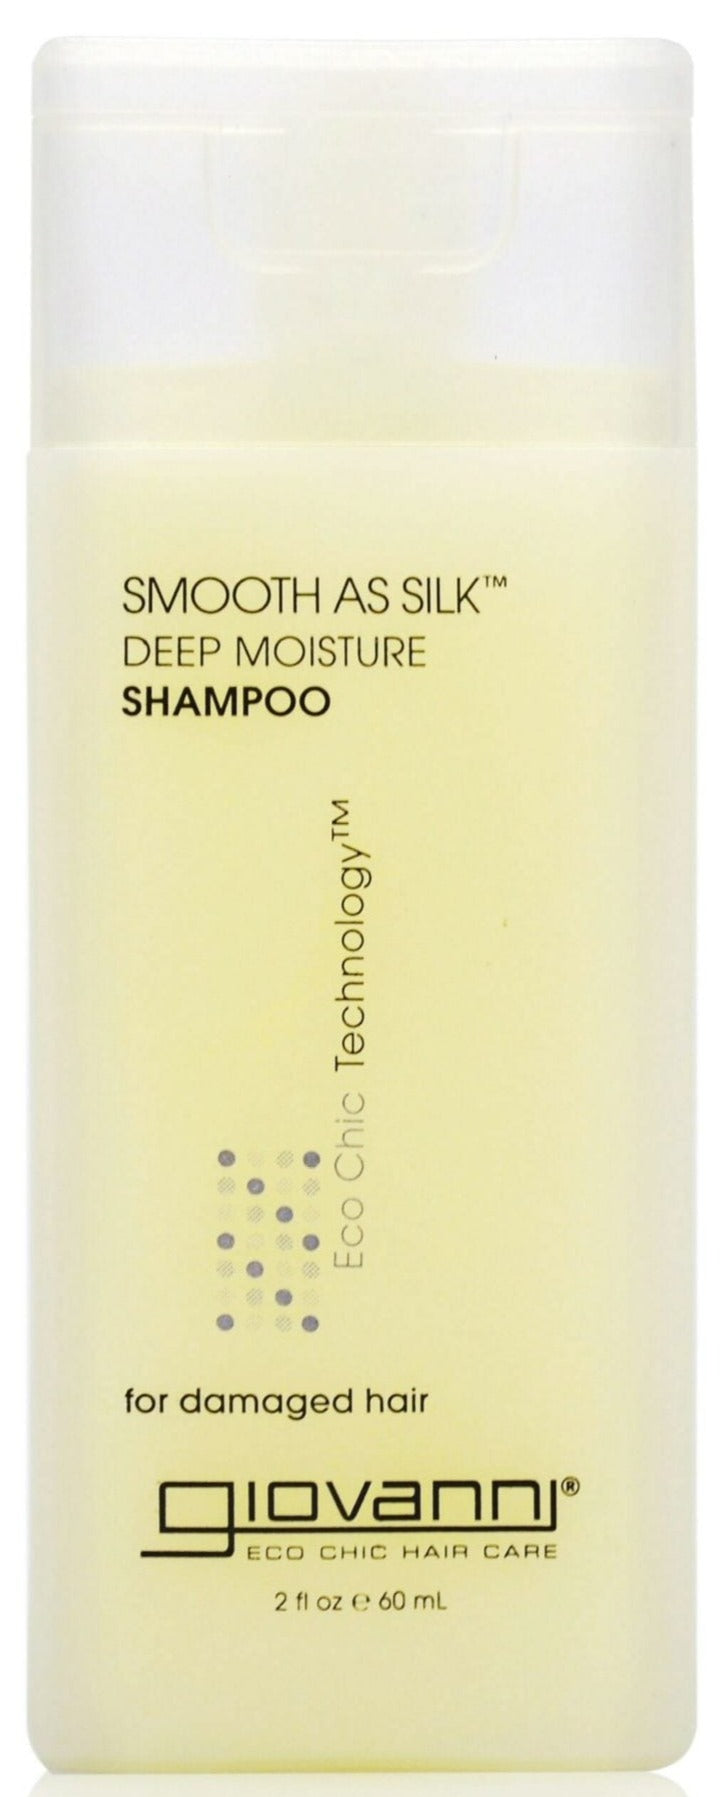 Giovanni Smooth As Silk Shampoo 2oz - MeStore